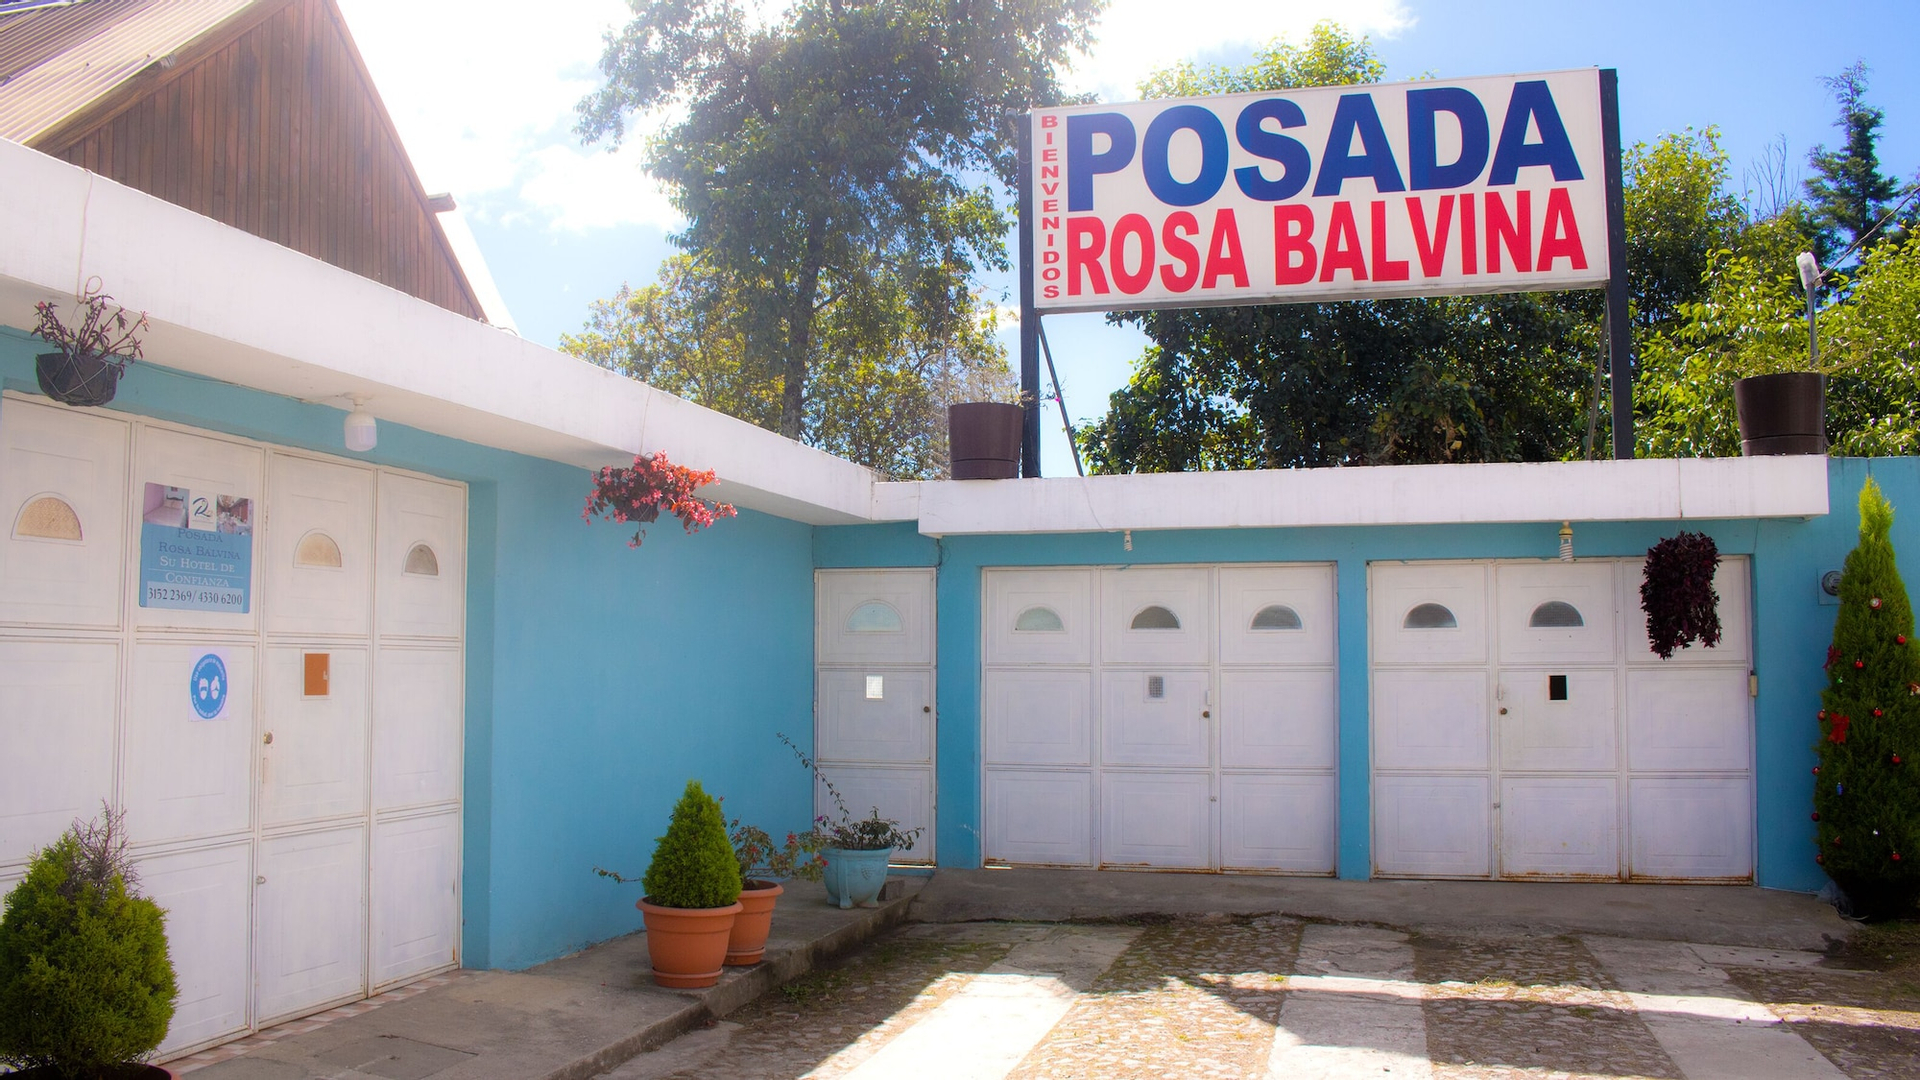 Hotel Posada Rosa Balvina, San Pedro Sacatepéquez